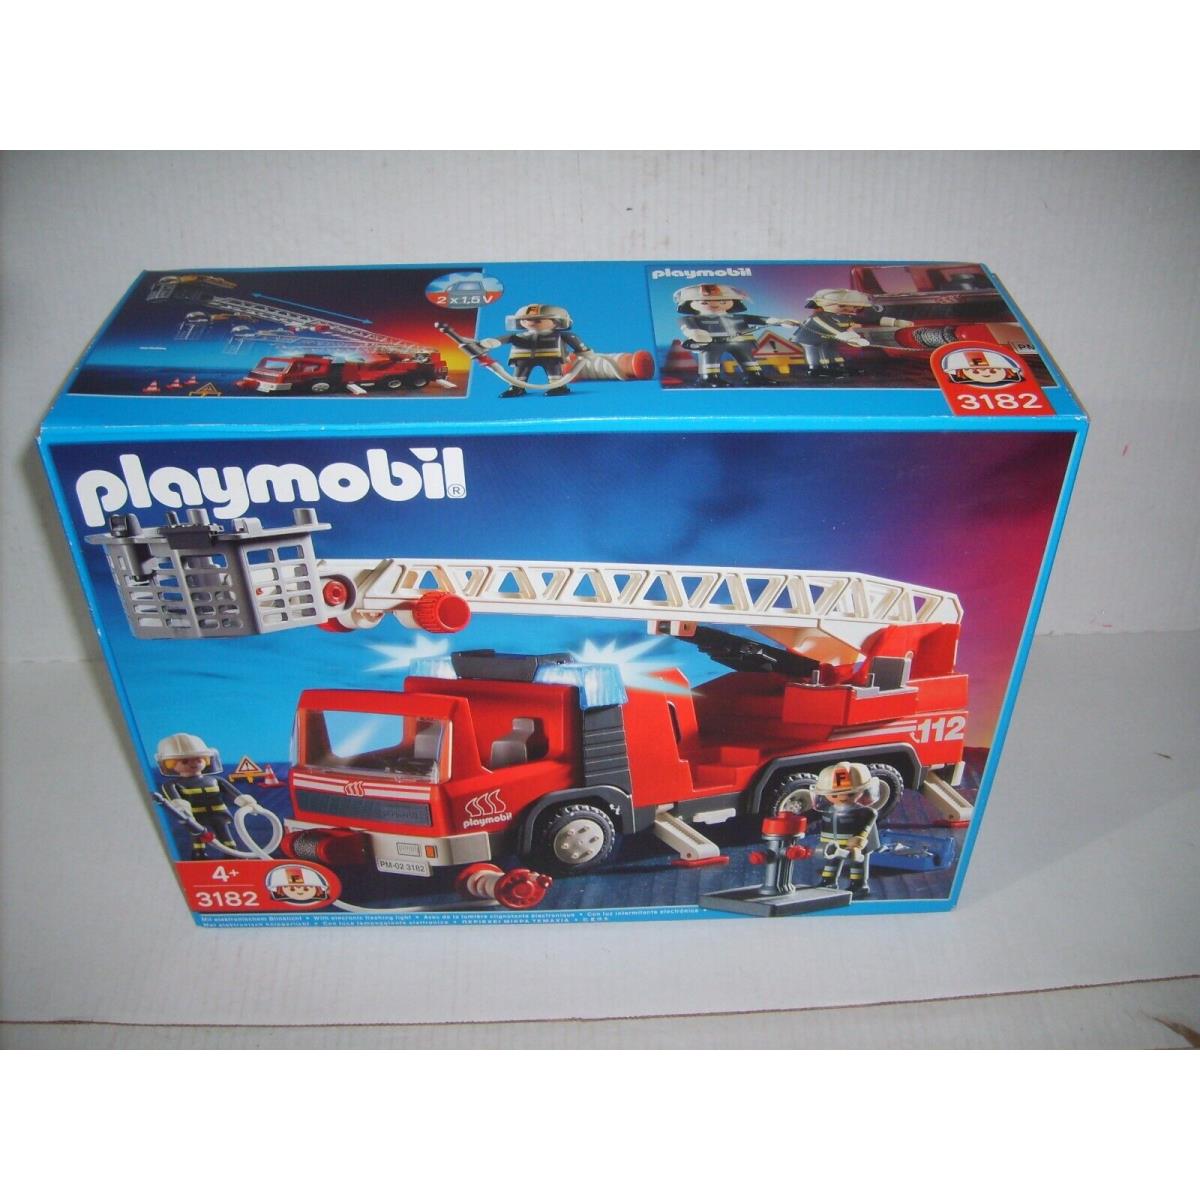 Playmobil Fire Dept. Ladder Truck Play Set 3182 Retired